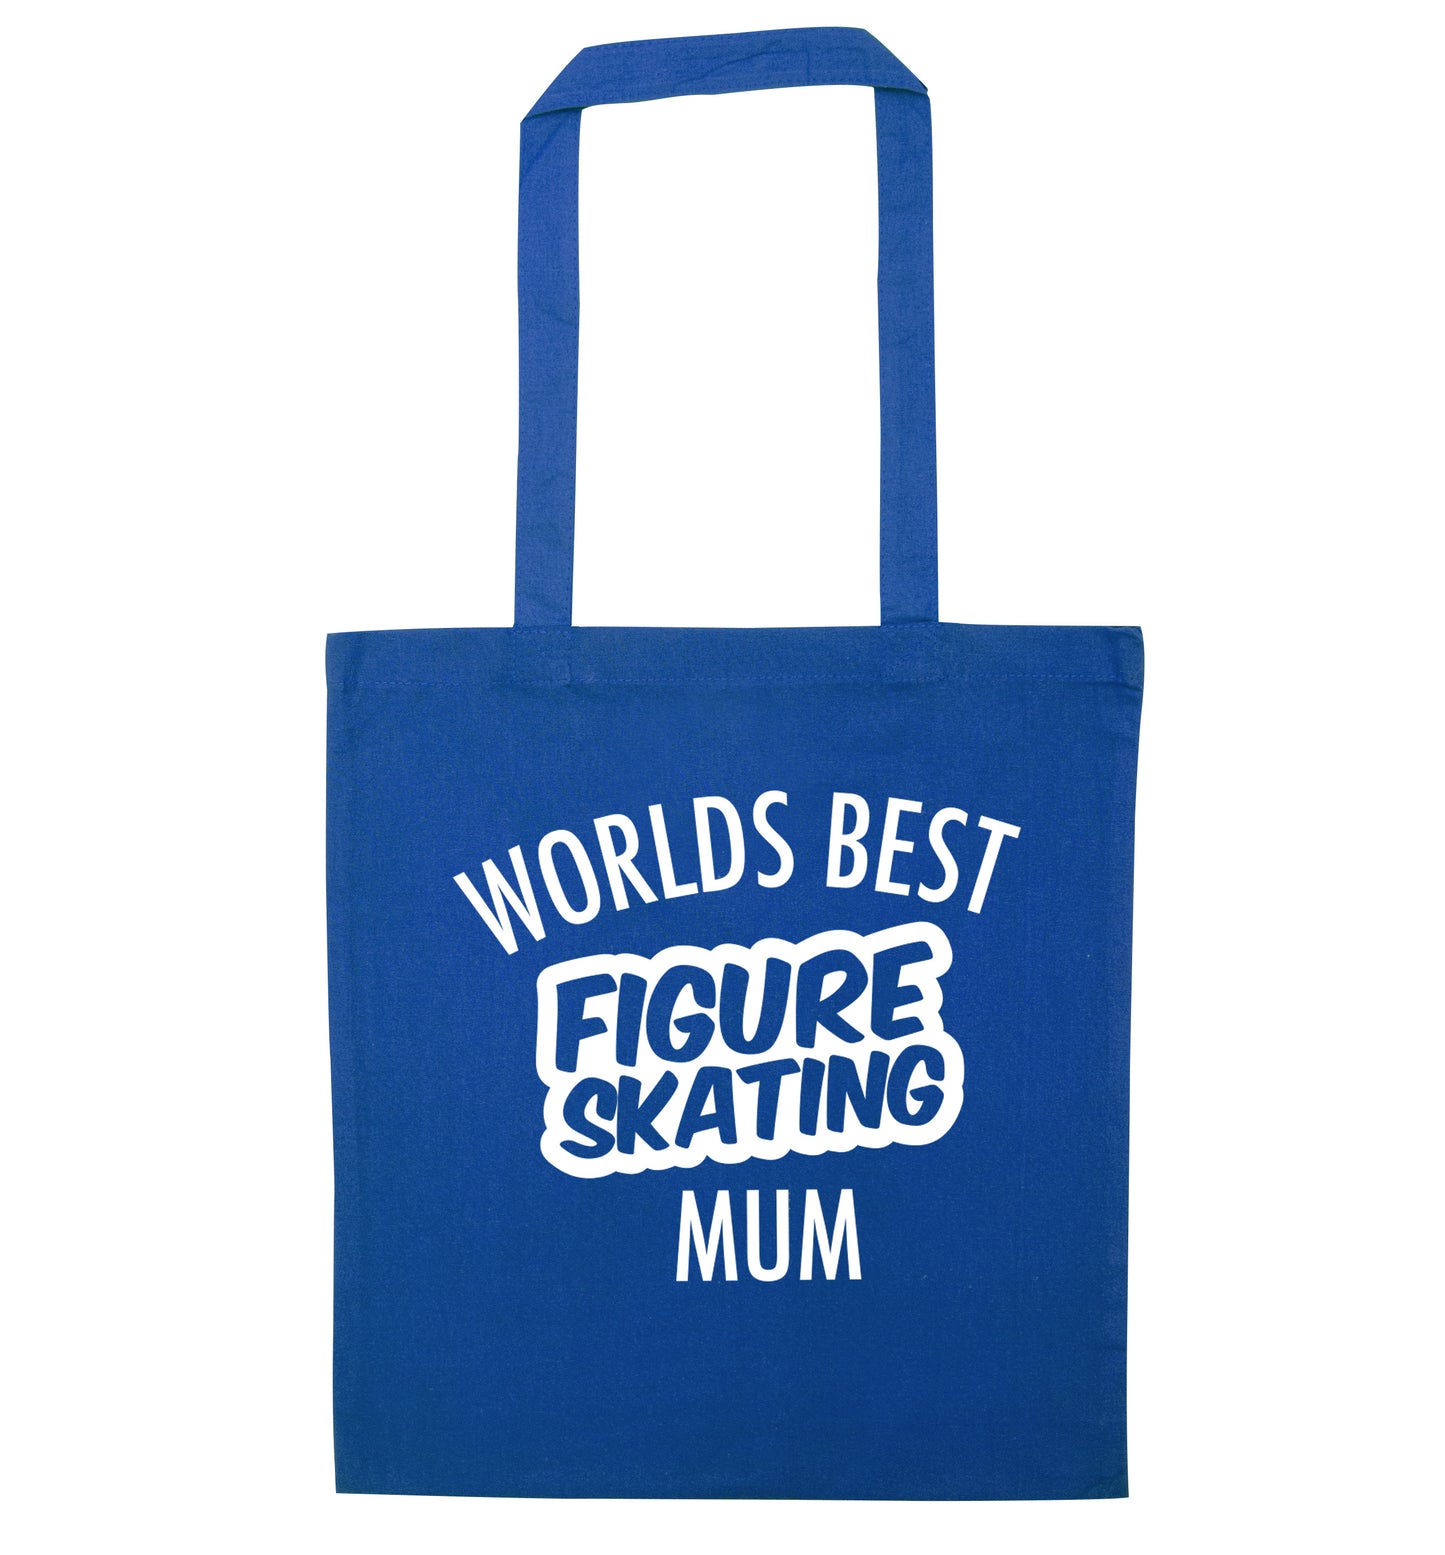 Worlds best figure skating mum blue tote bag